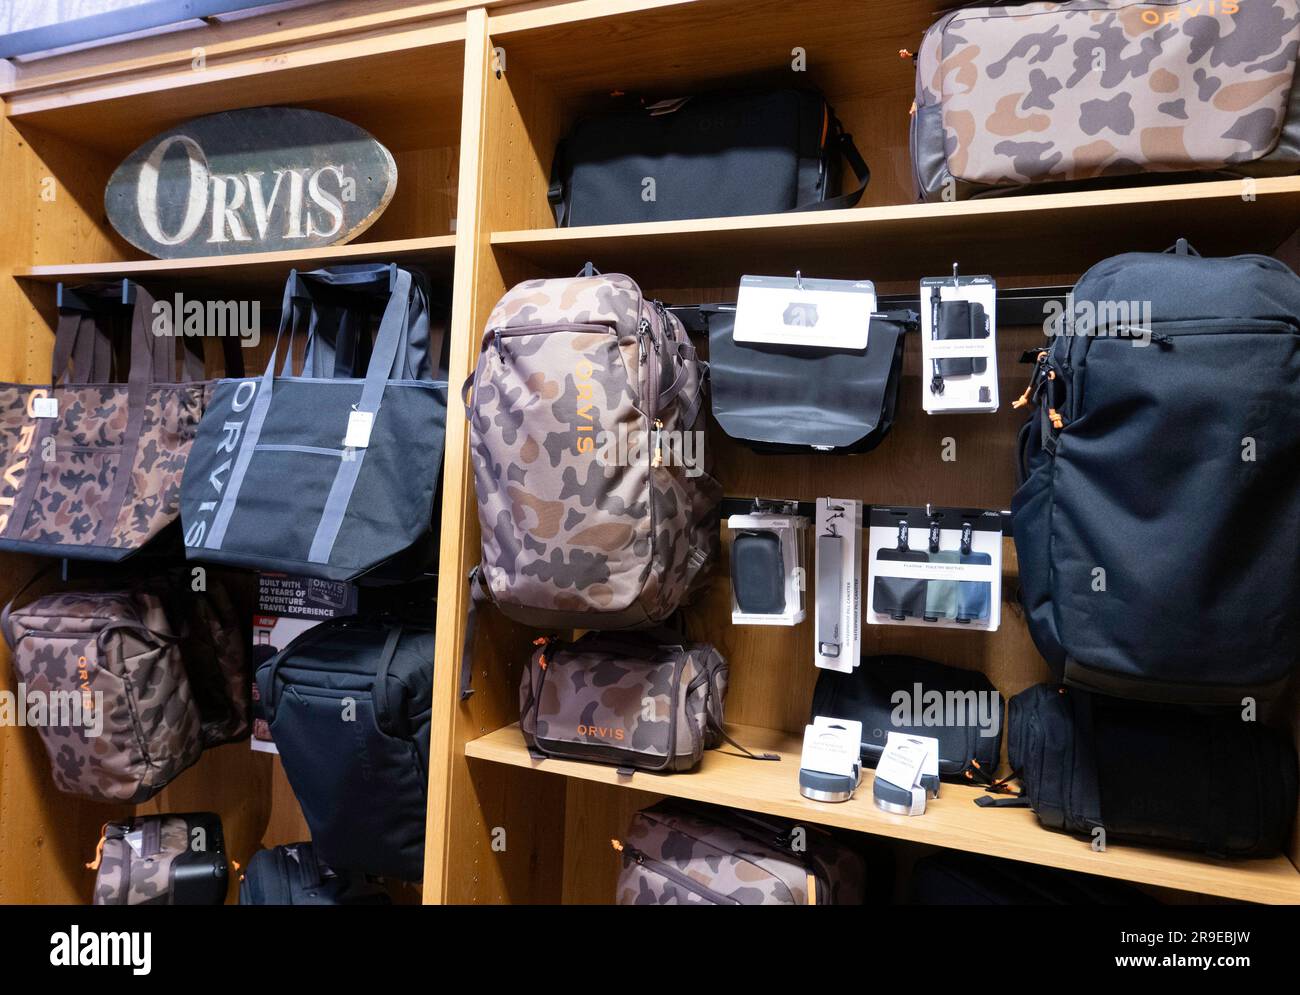 Orvis Fifth Avenue Store Interior, New York City, USA Stock Photo